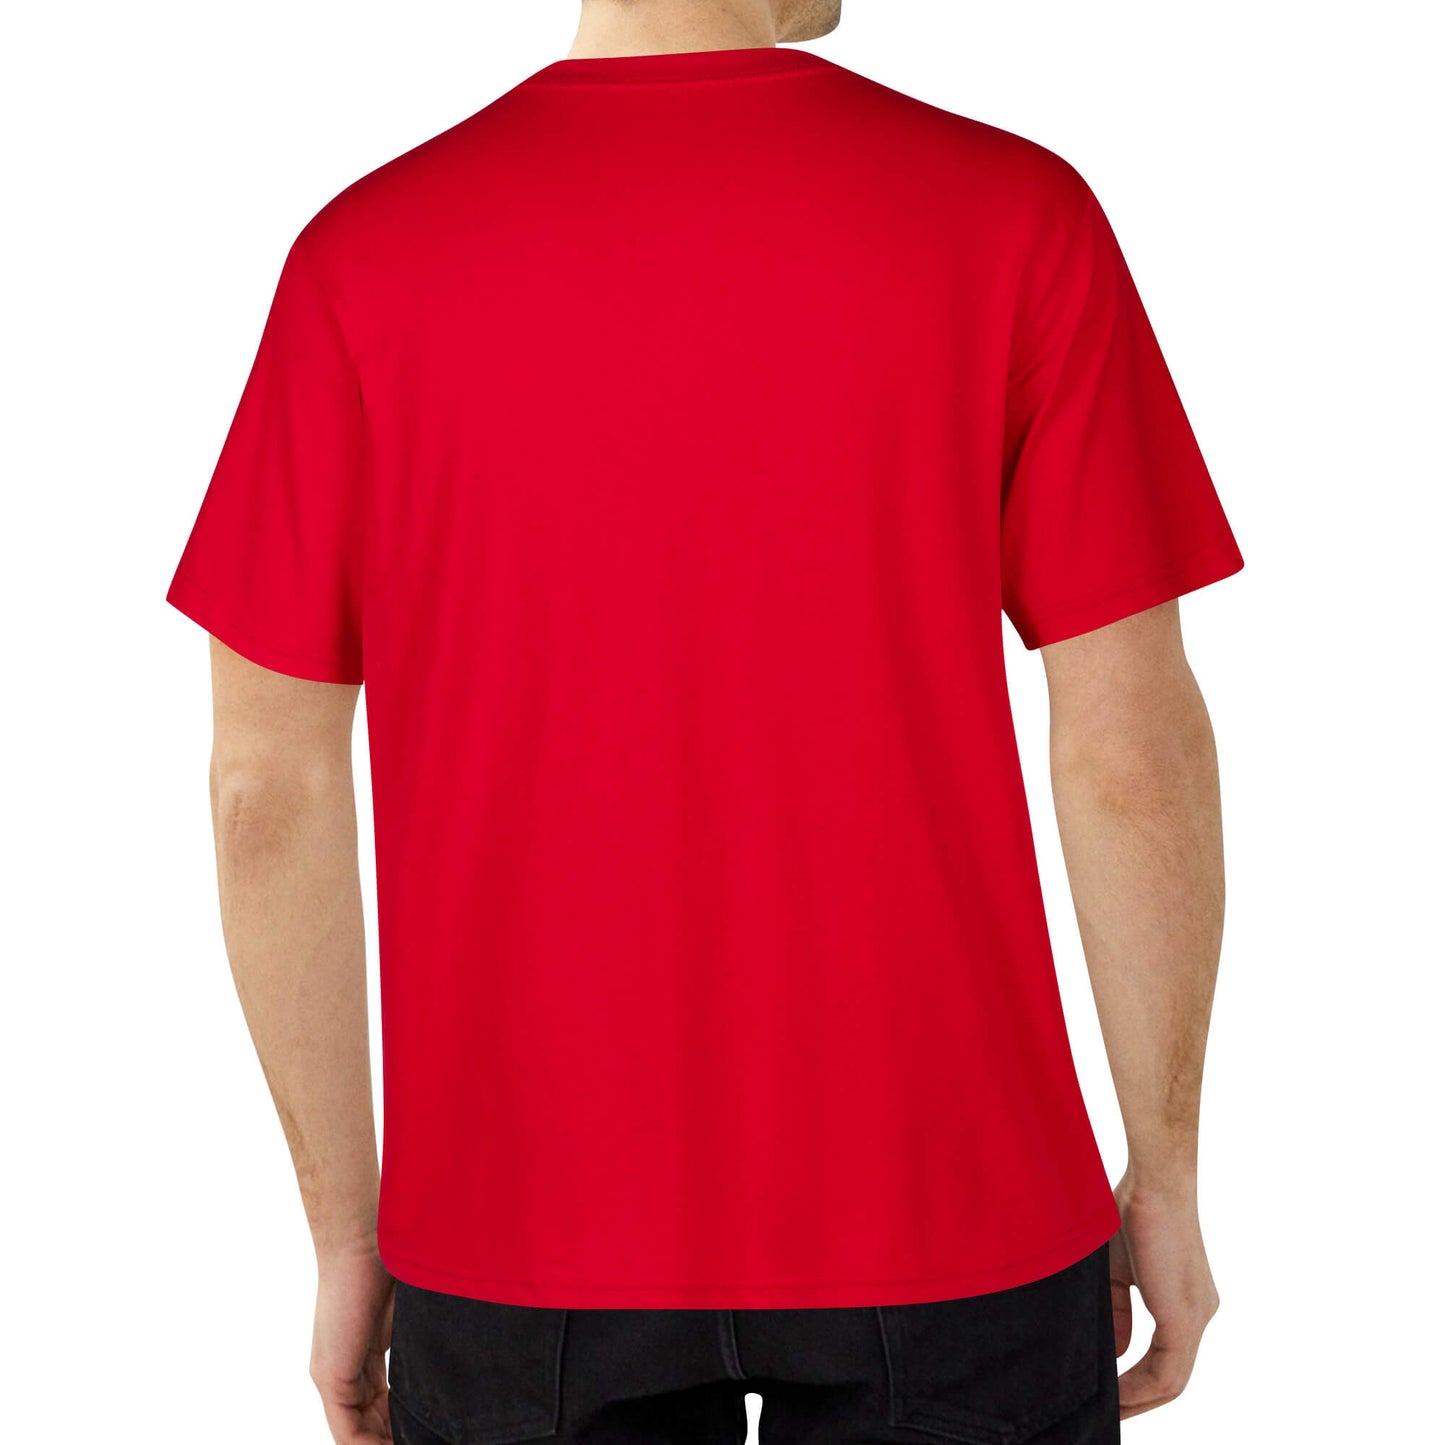 DJMD Mens Embroidered Chest Design Cotton T-shirt